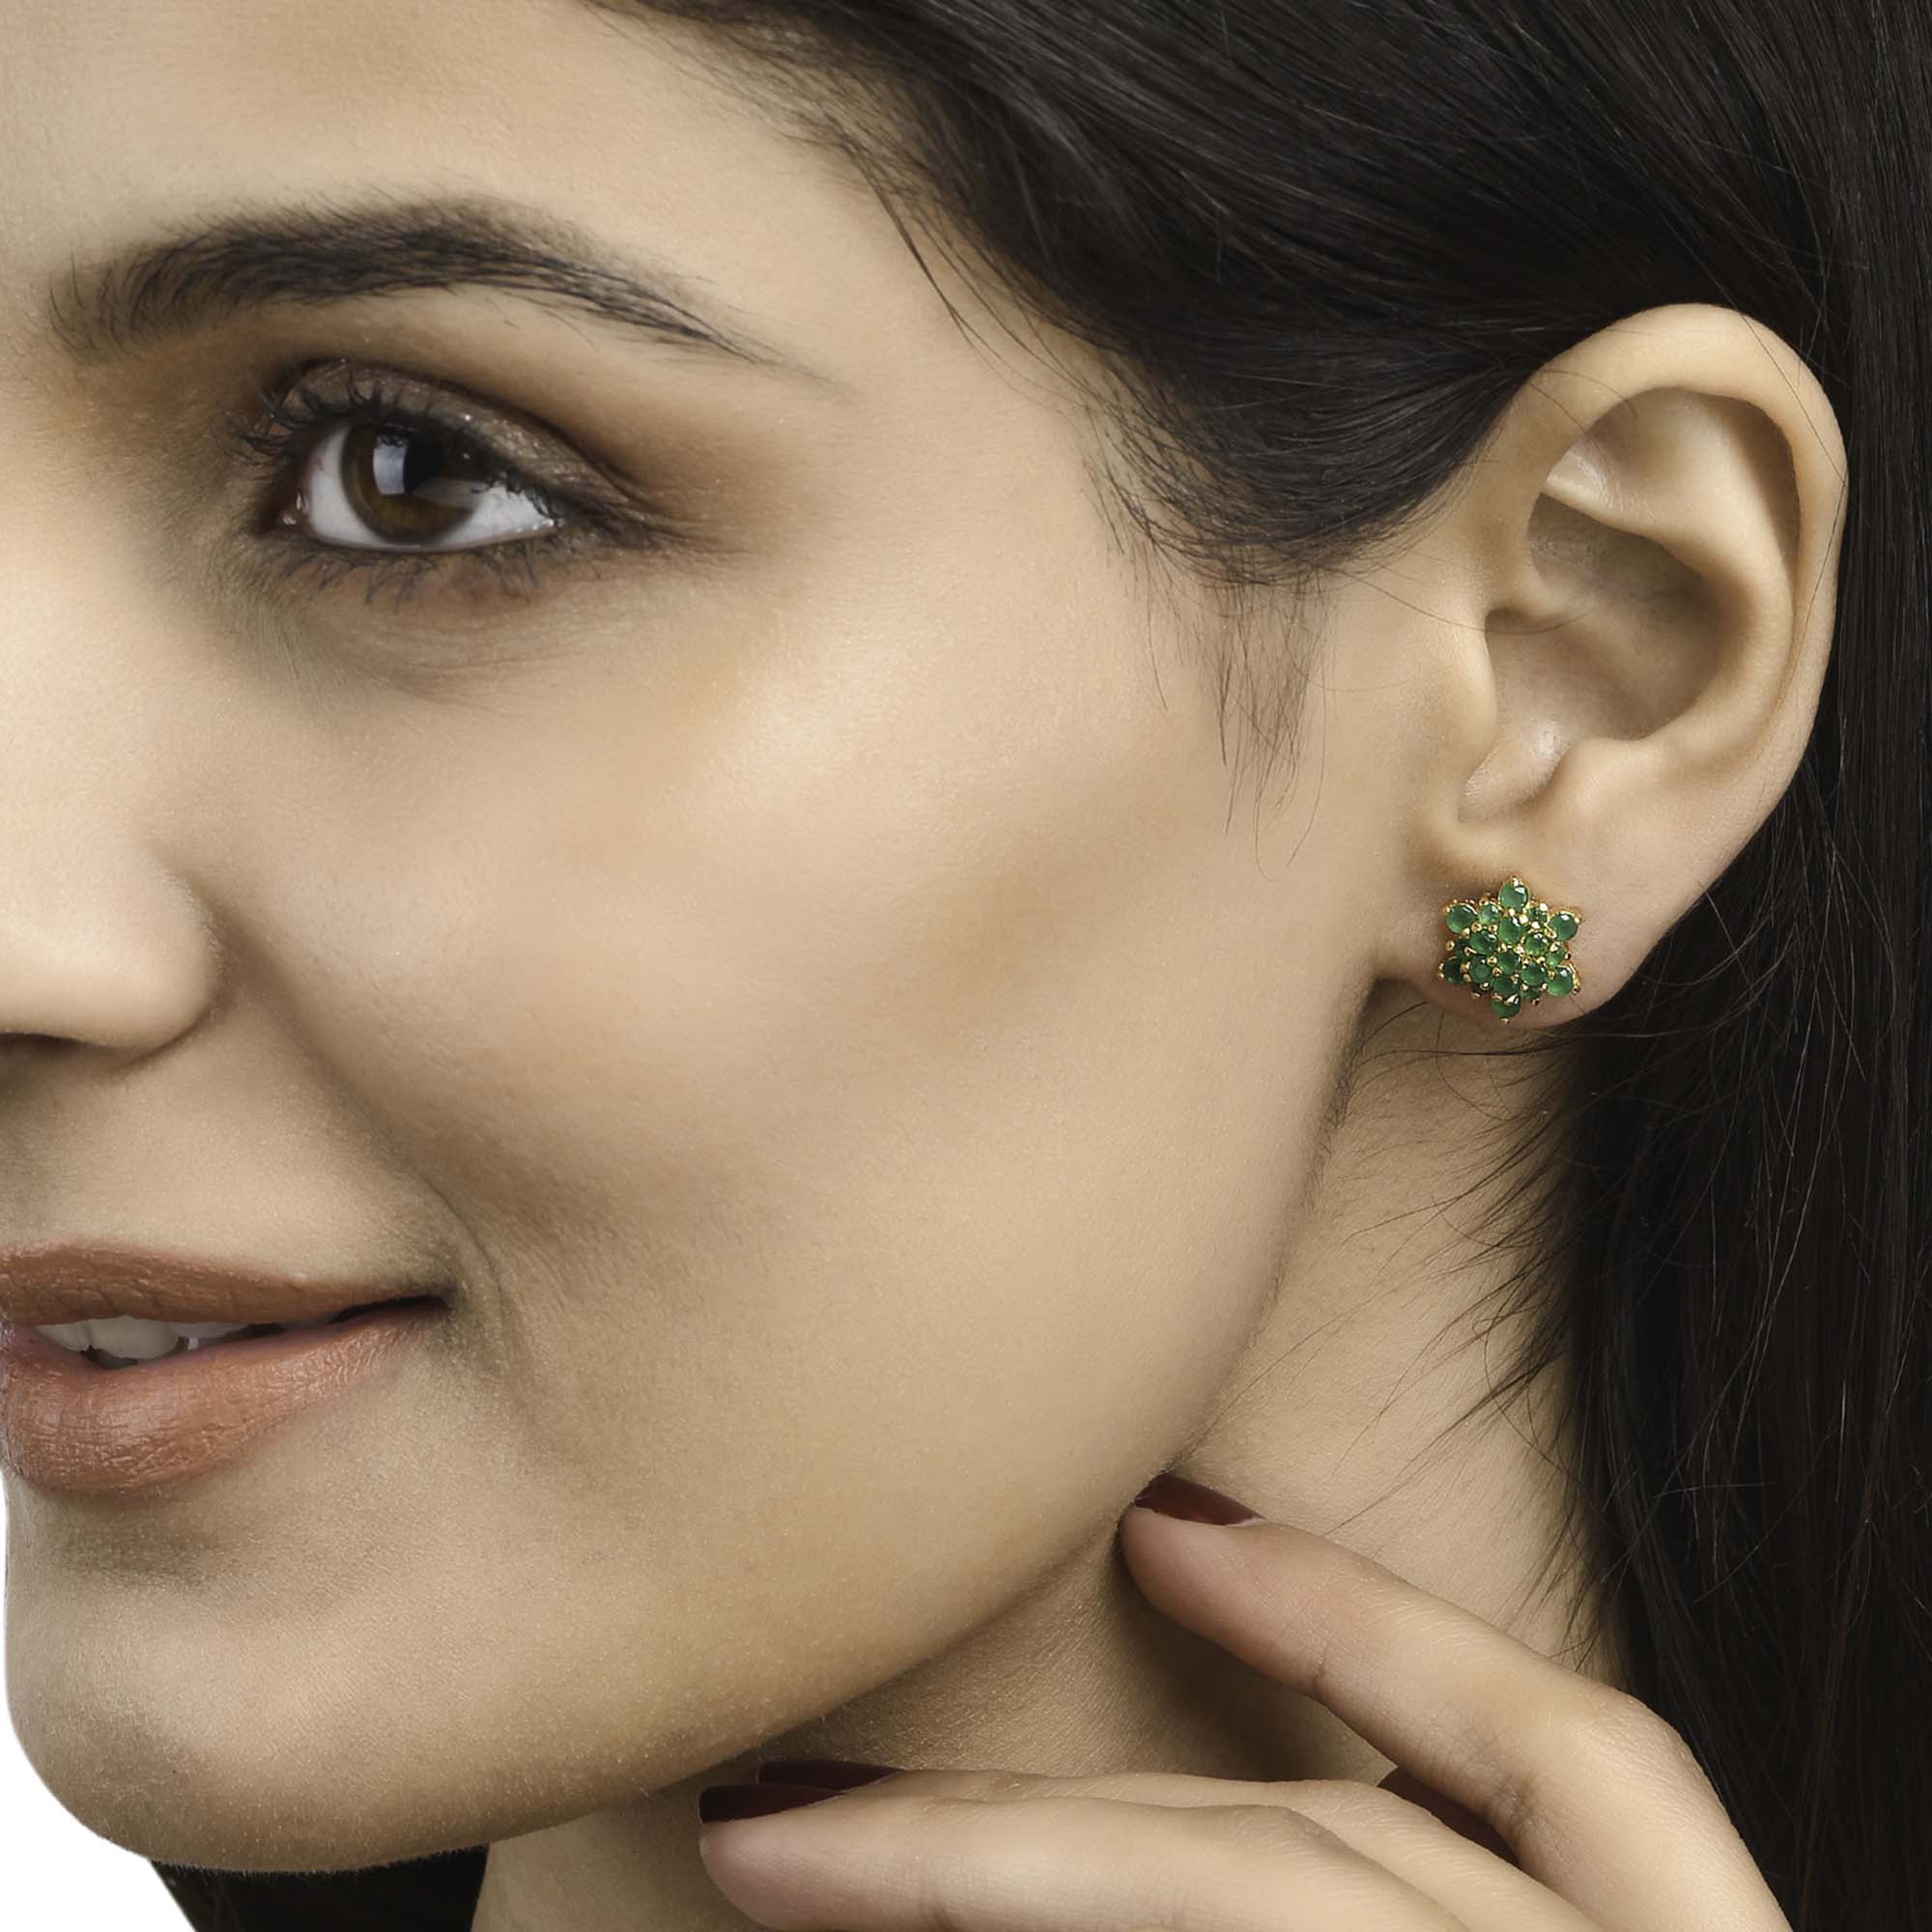 Women's Green Cluster Setting Zircons Stud Earrings - Voylla